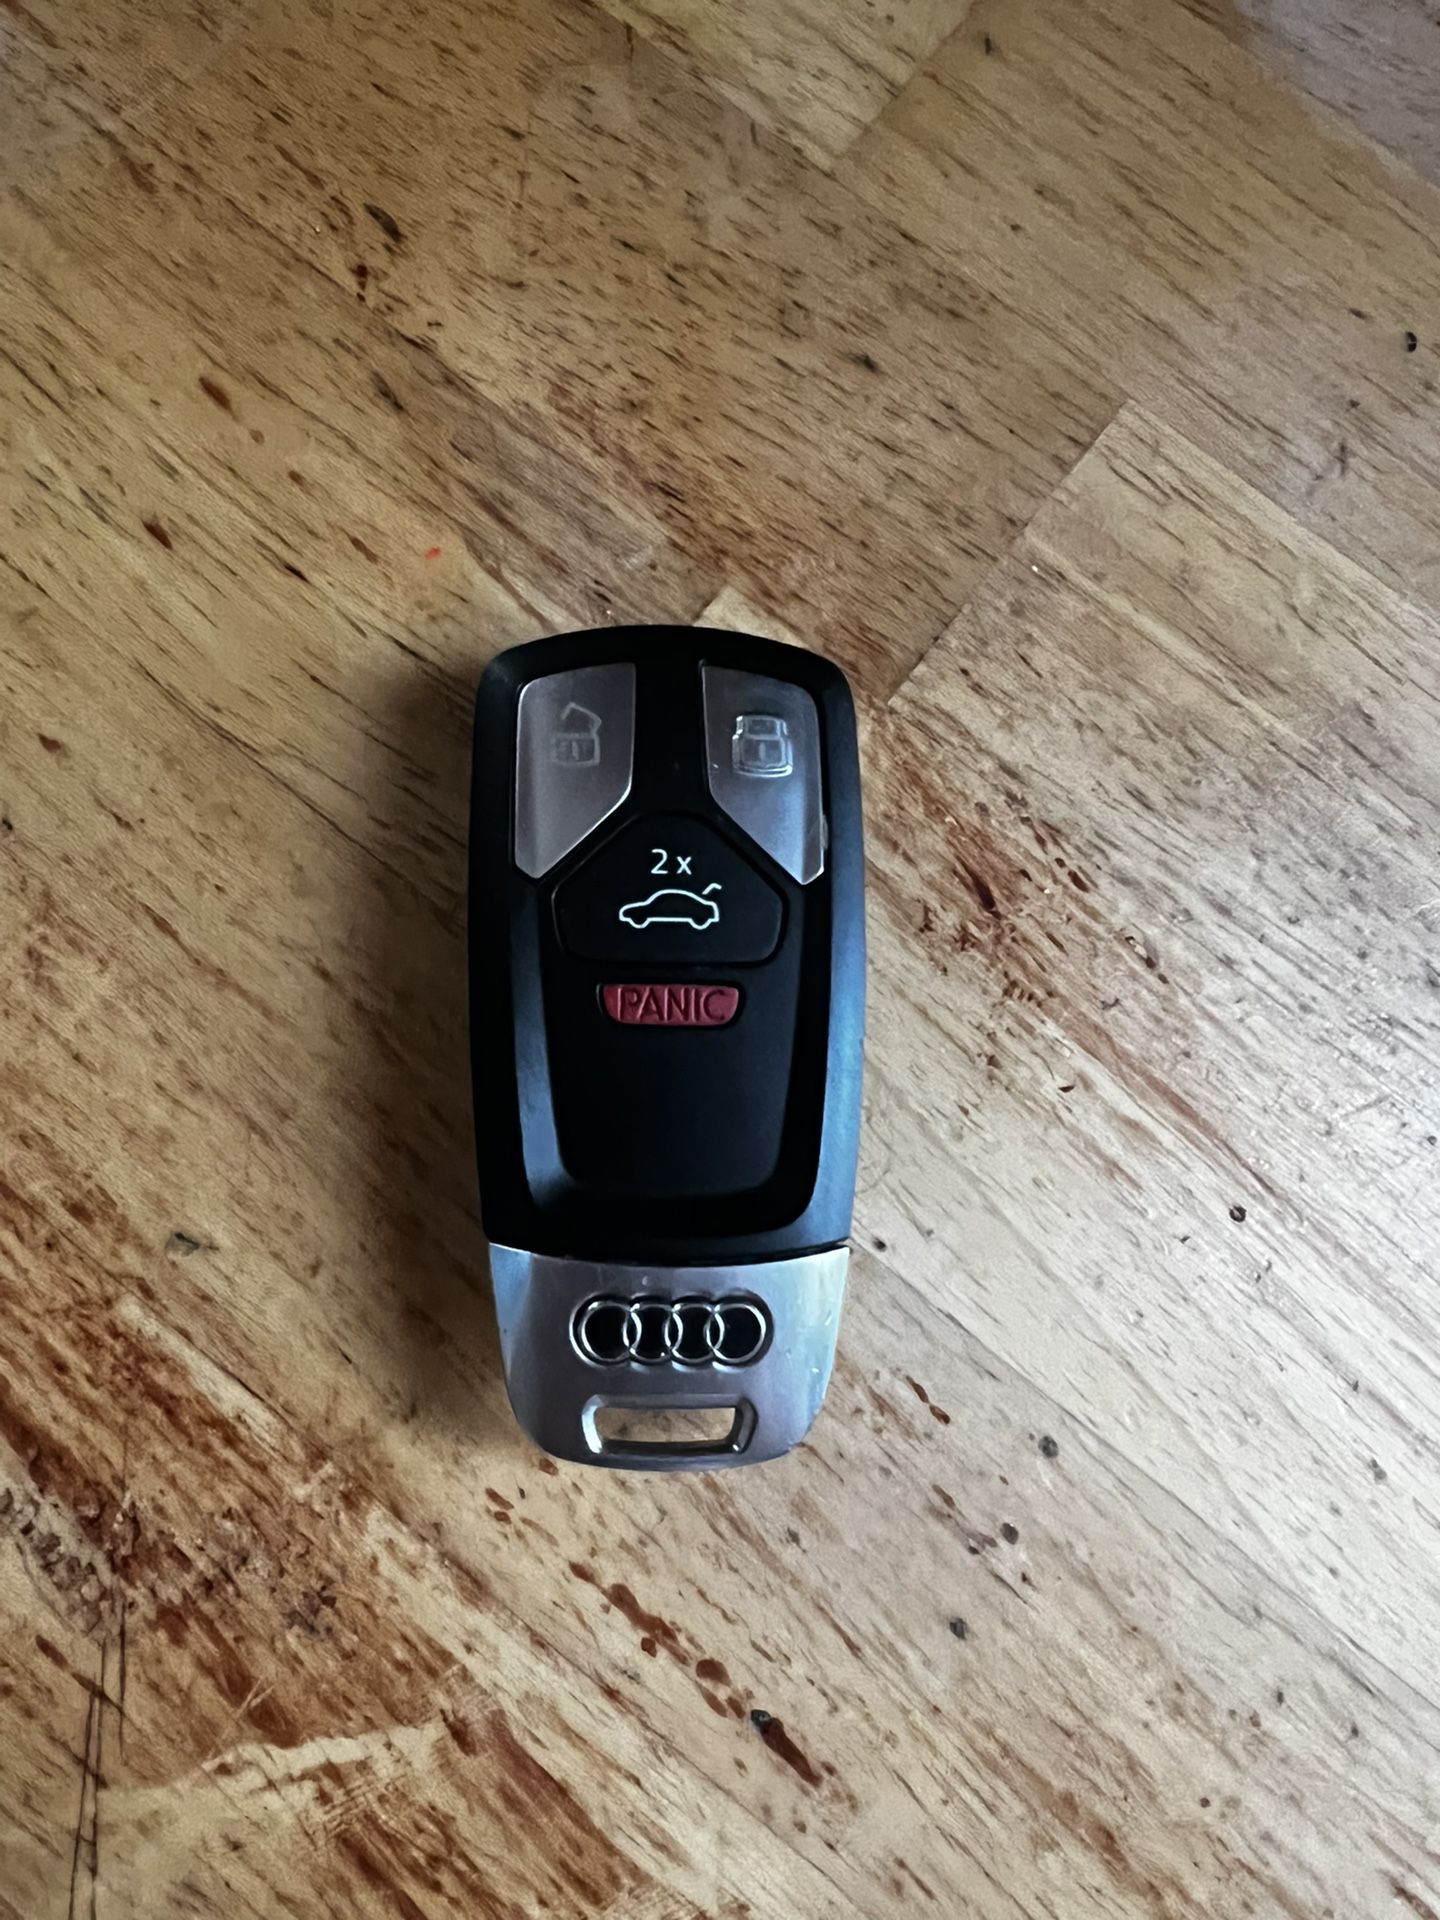 2021 Audi Q5 Key Fob